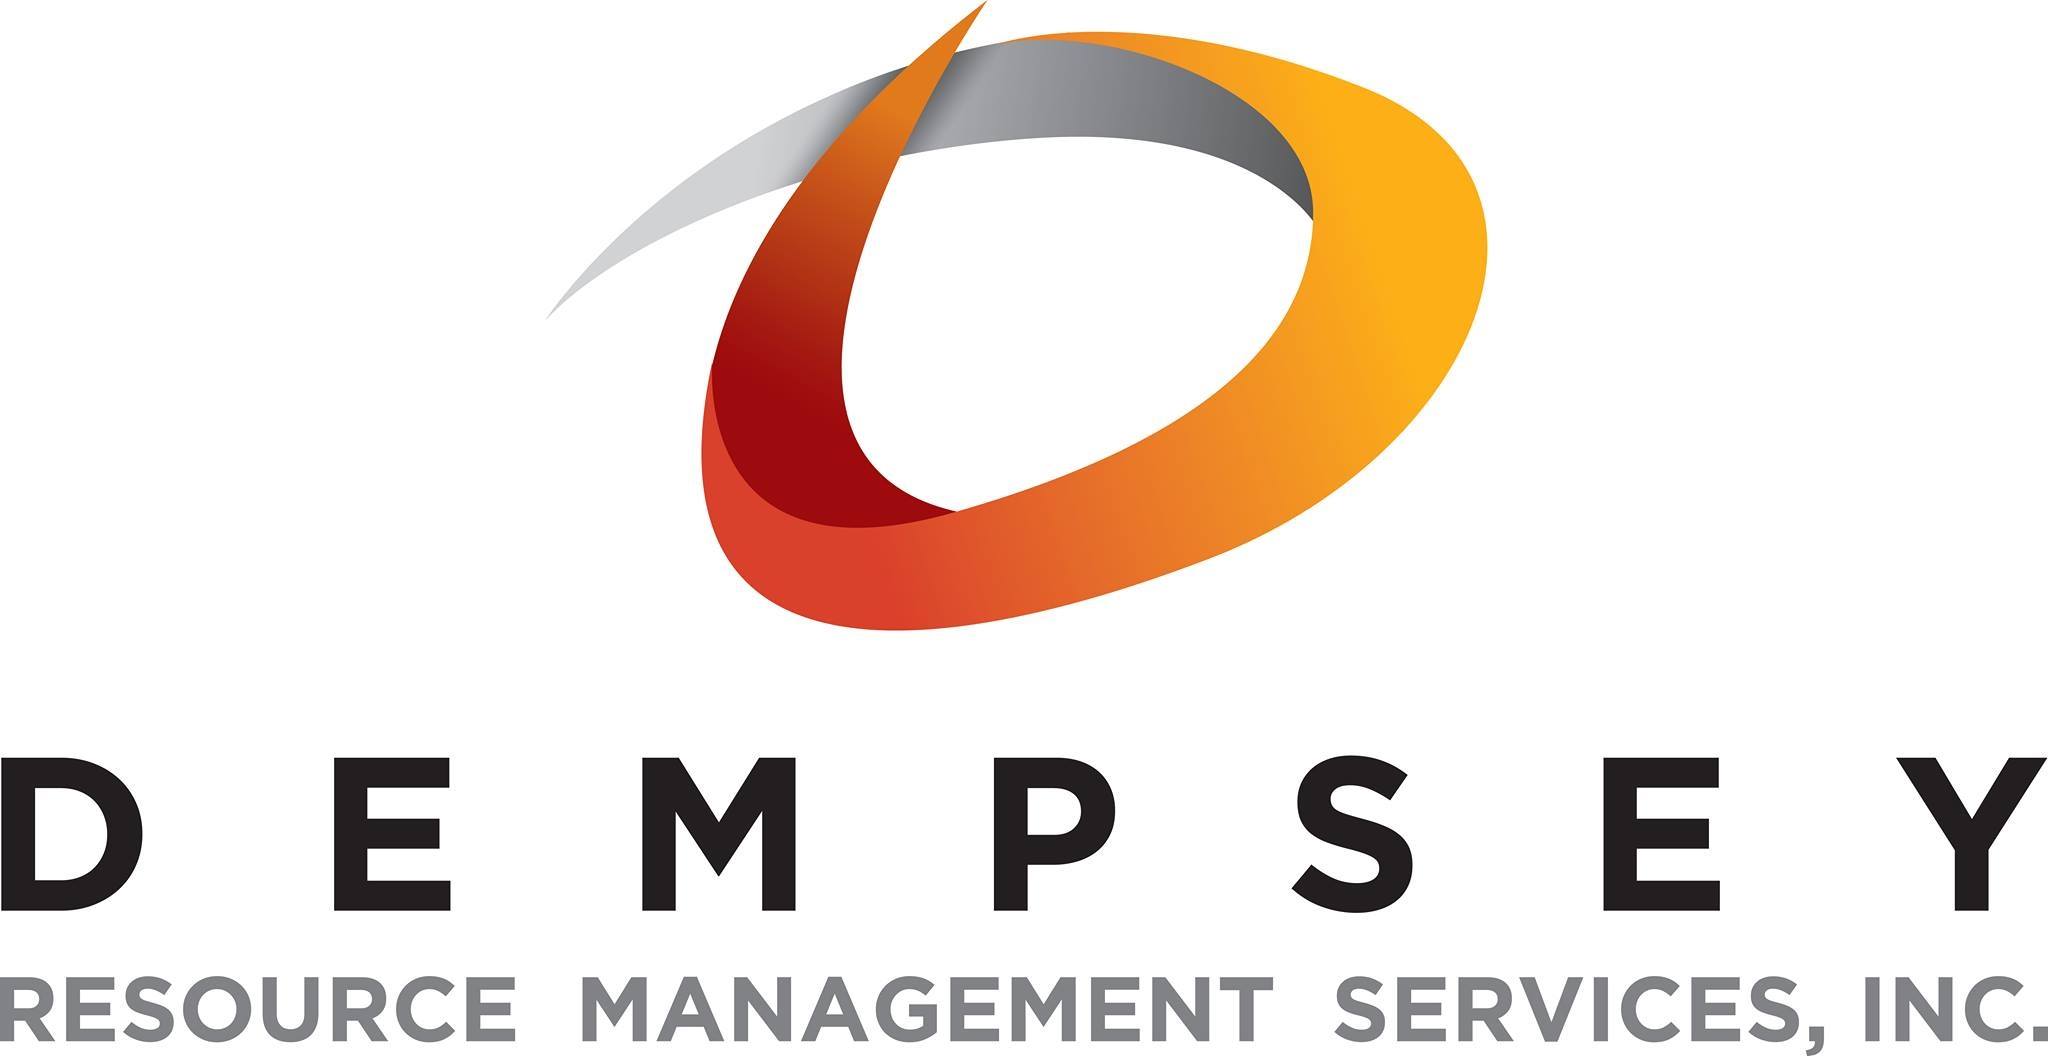 Administrative Assistant - Dempsey Resource Management Inc. - December ...